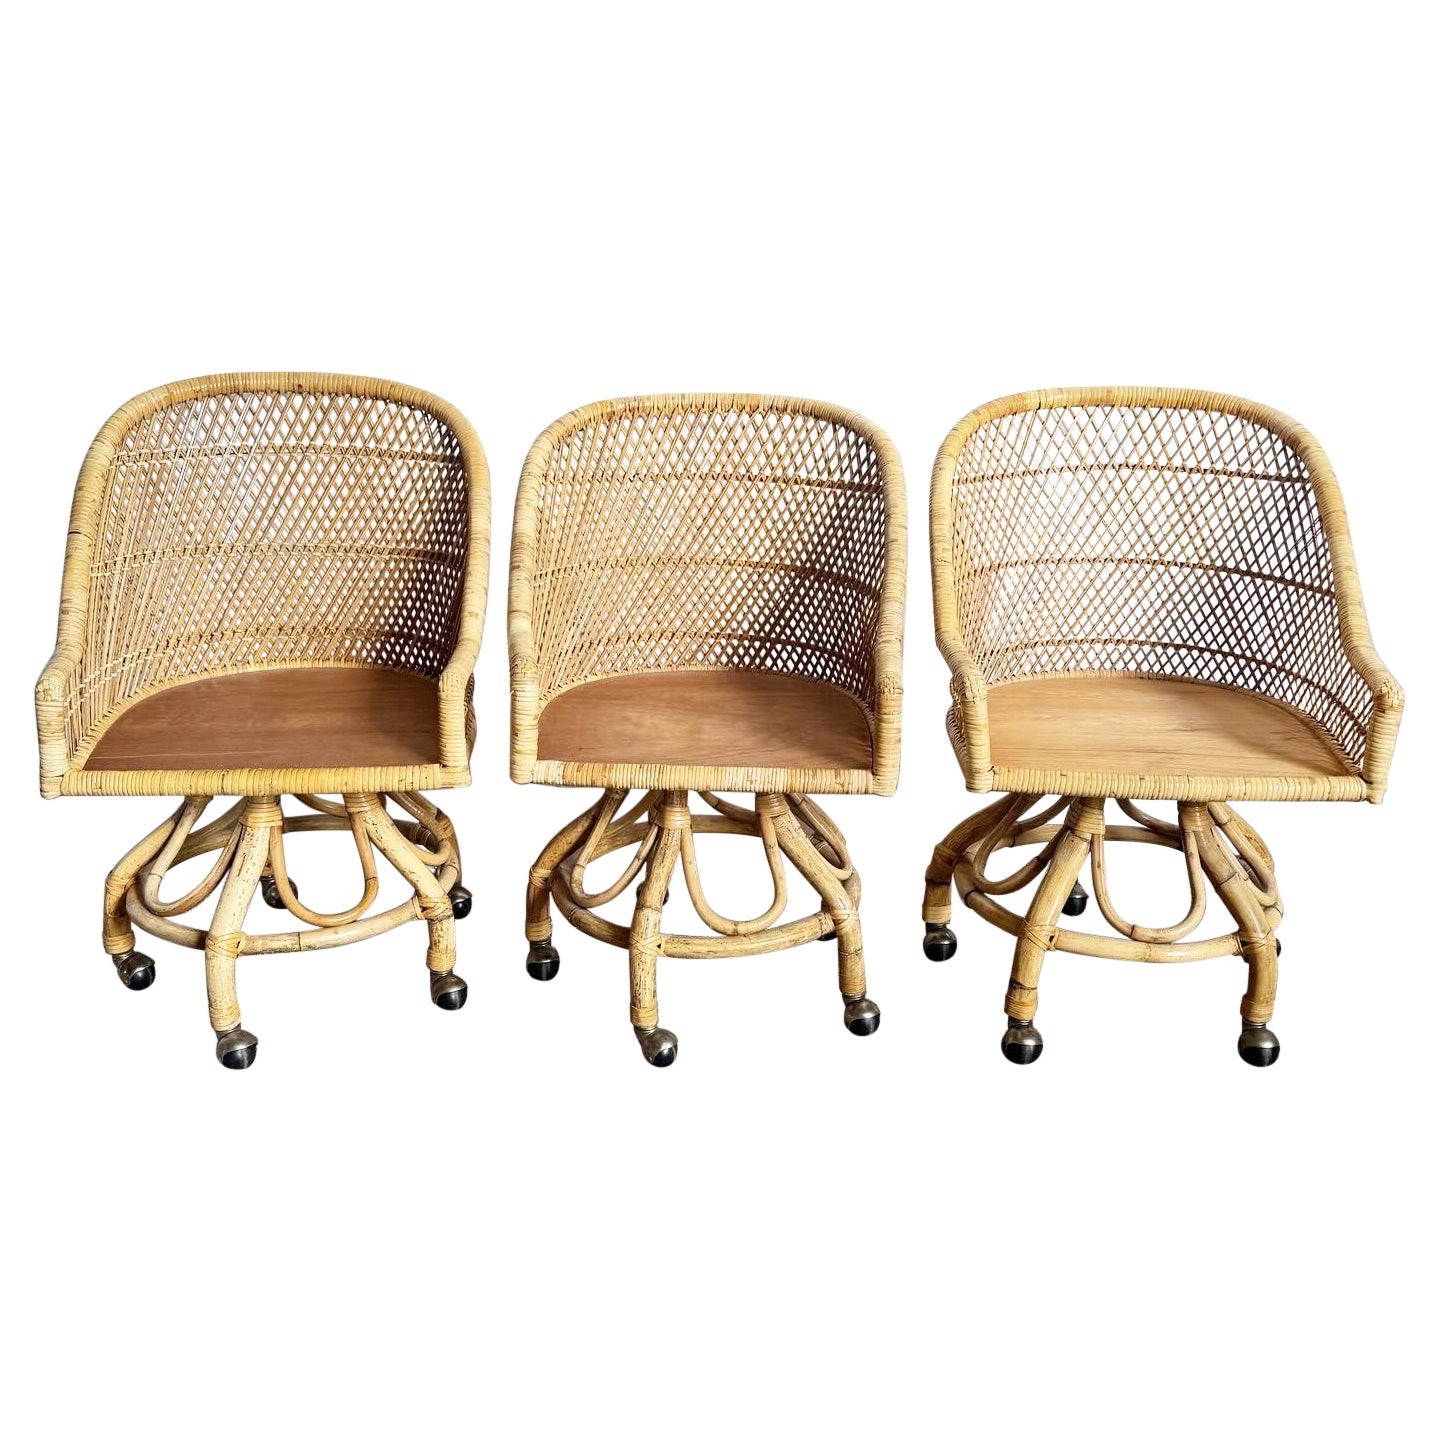 Boho Chic Buri Rattan Bamboo Swivel Barrel Dining Chairs on Casters ‚Äì Set of 3